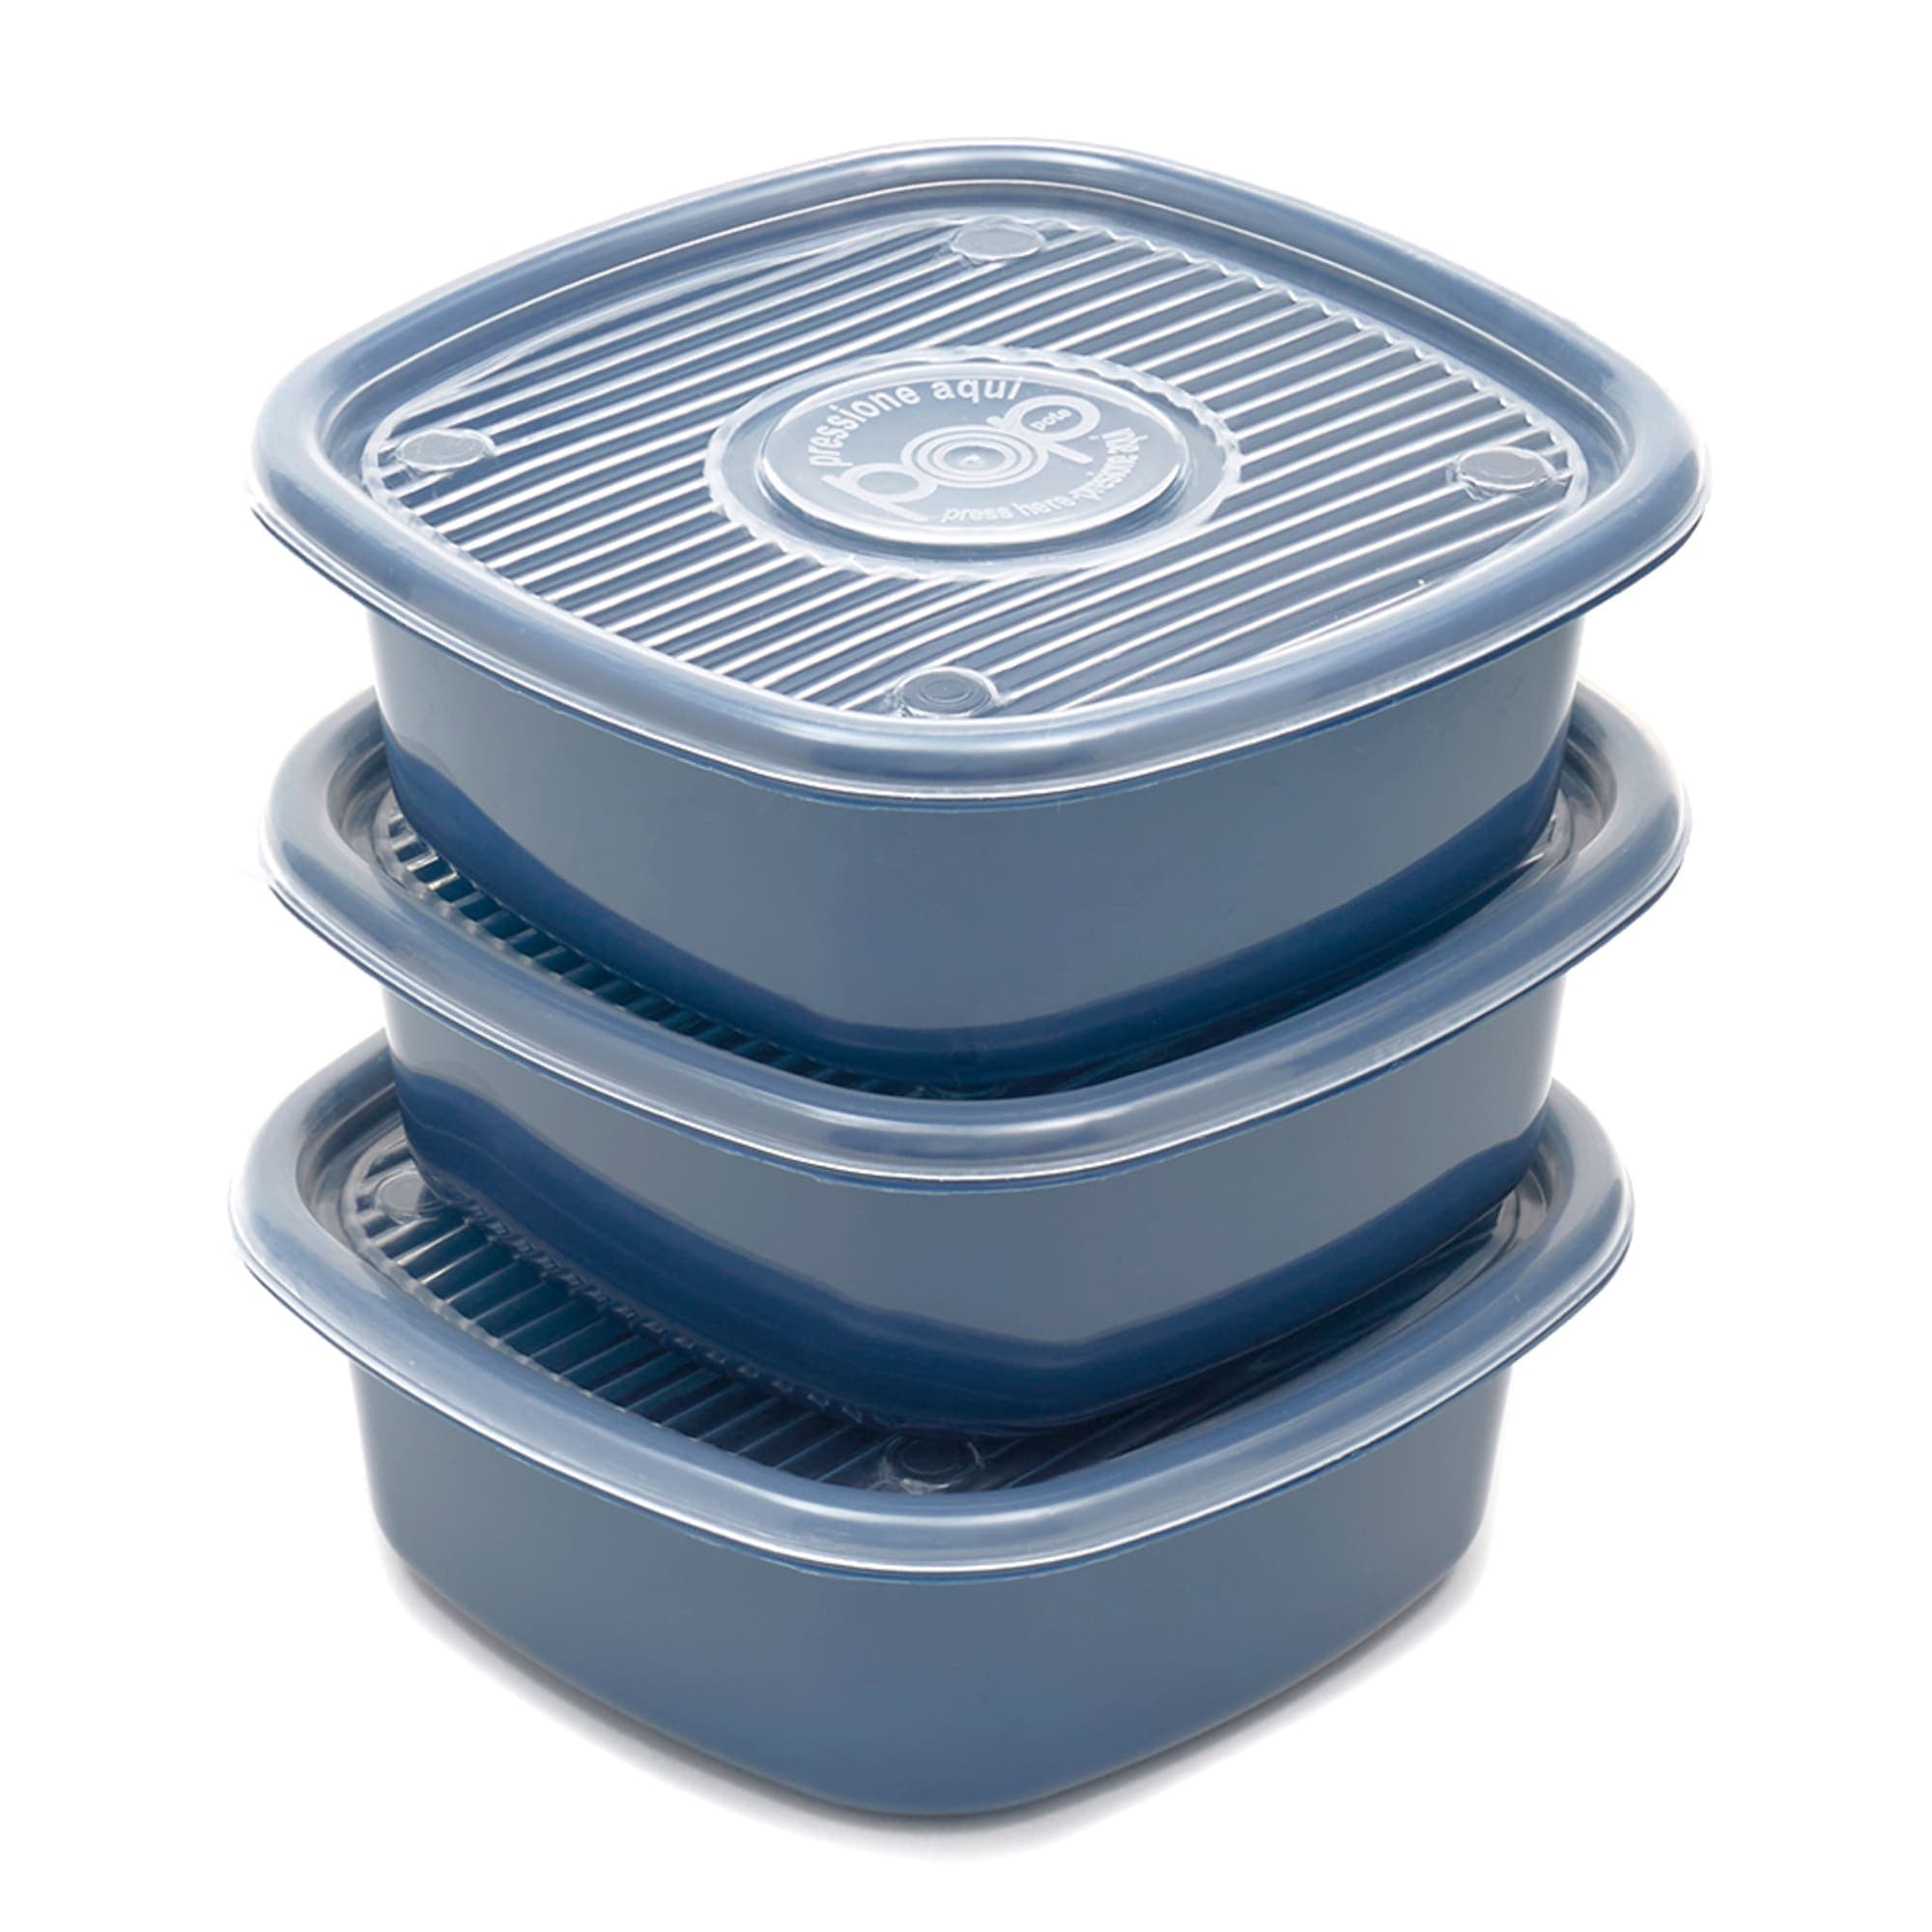 Home Basics 6 Piece Square Plastic Meal Prep Set, (33.8 oz), Blue $5 EACH, CASE PACK OF 7